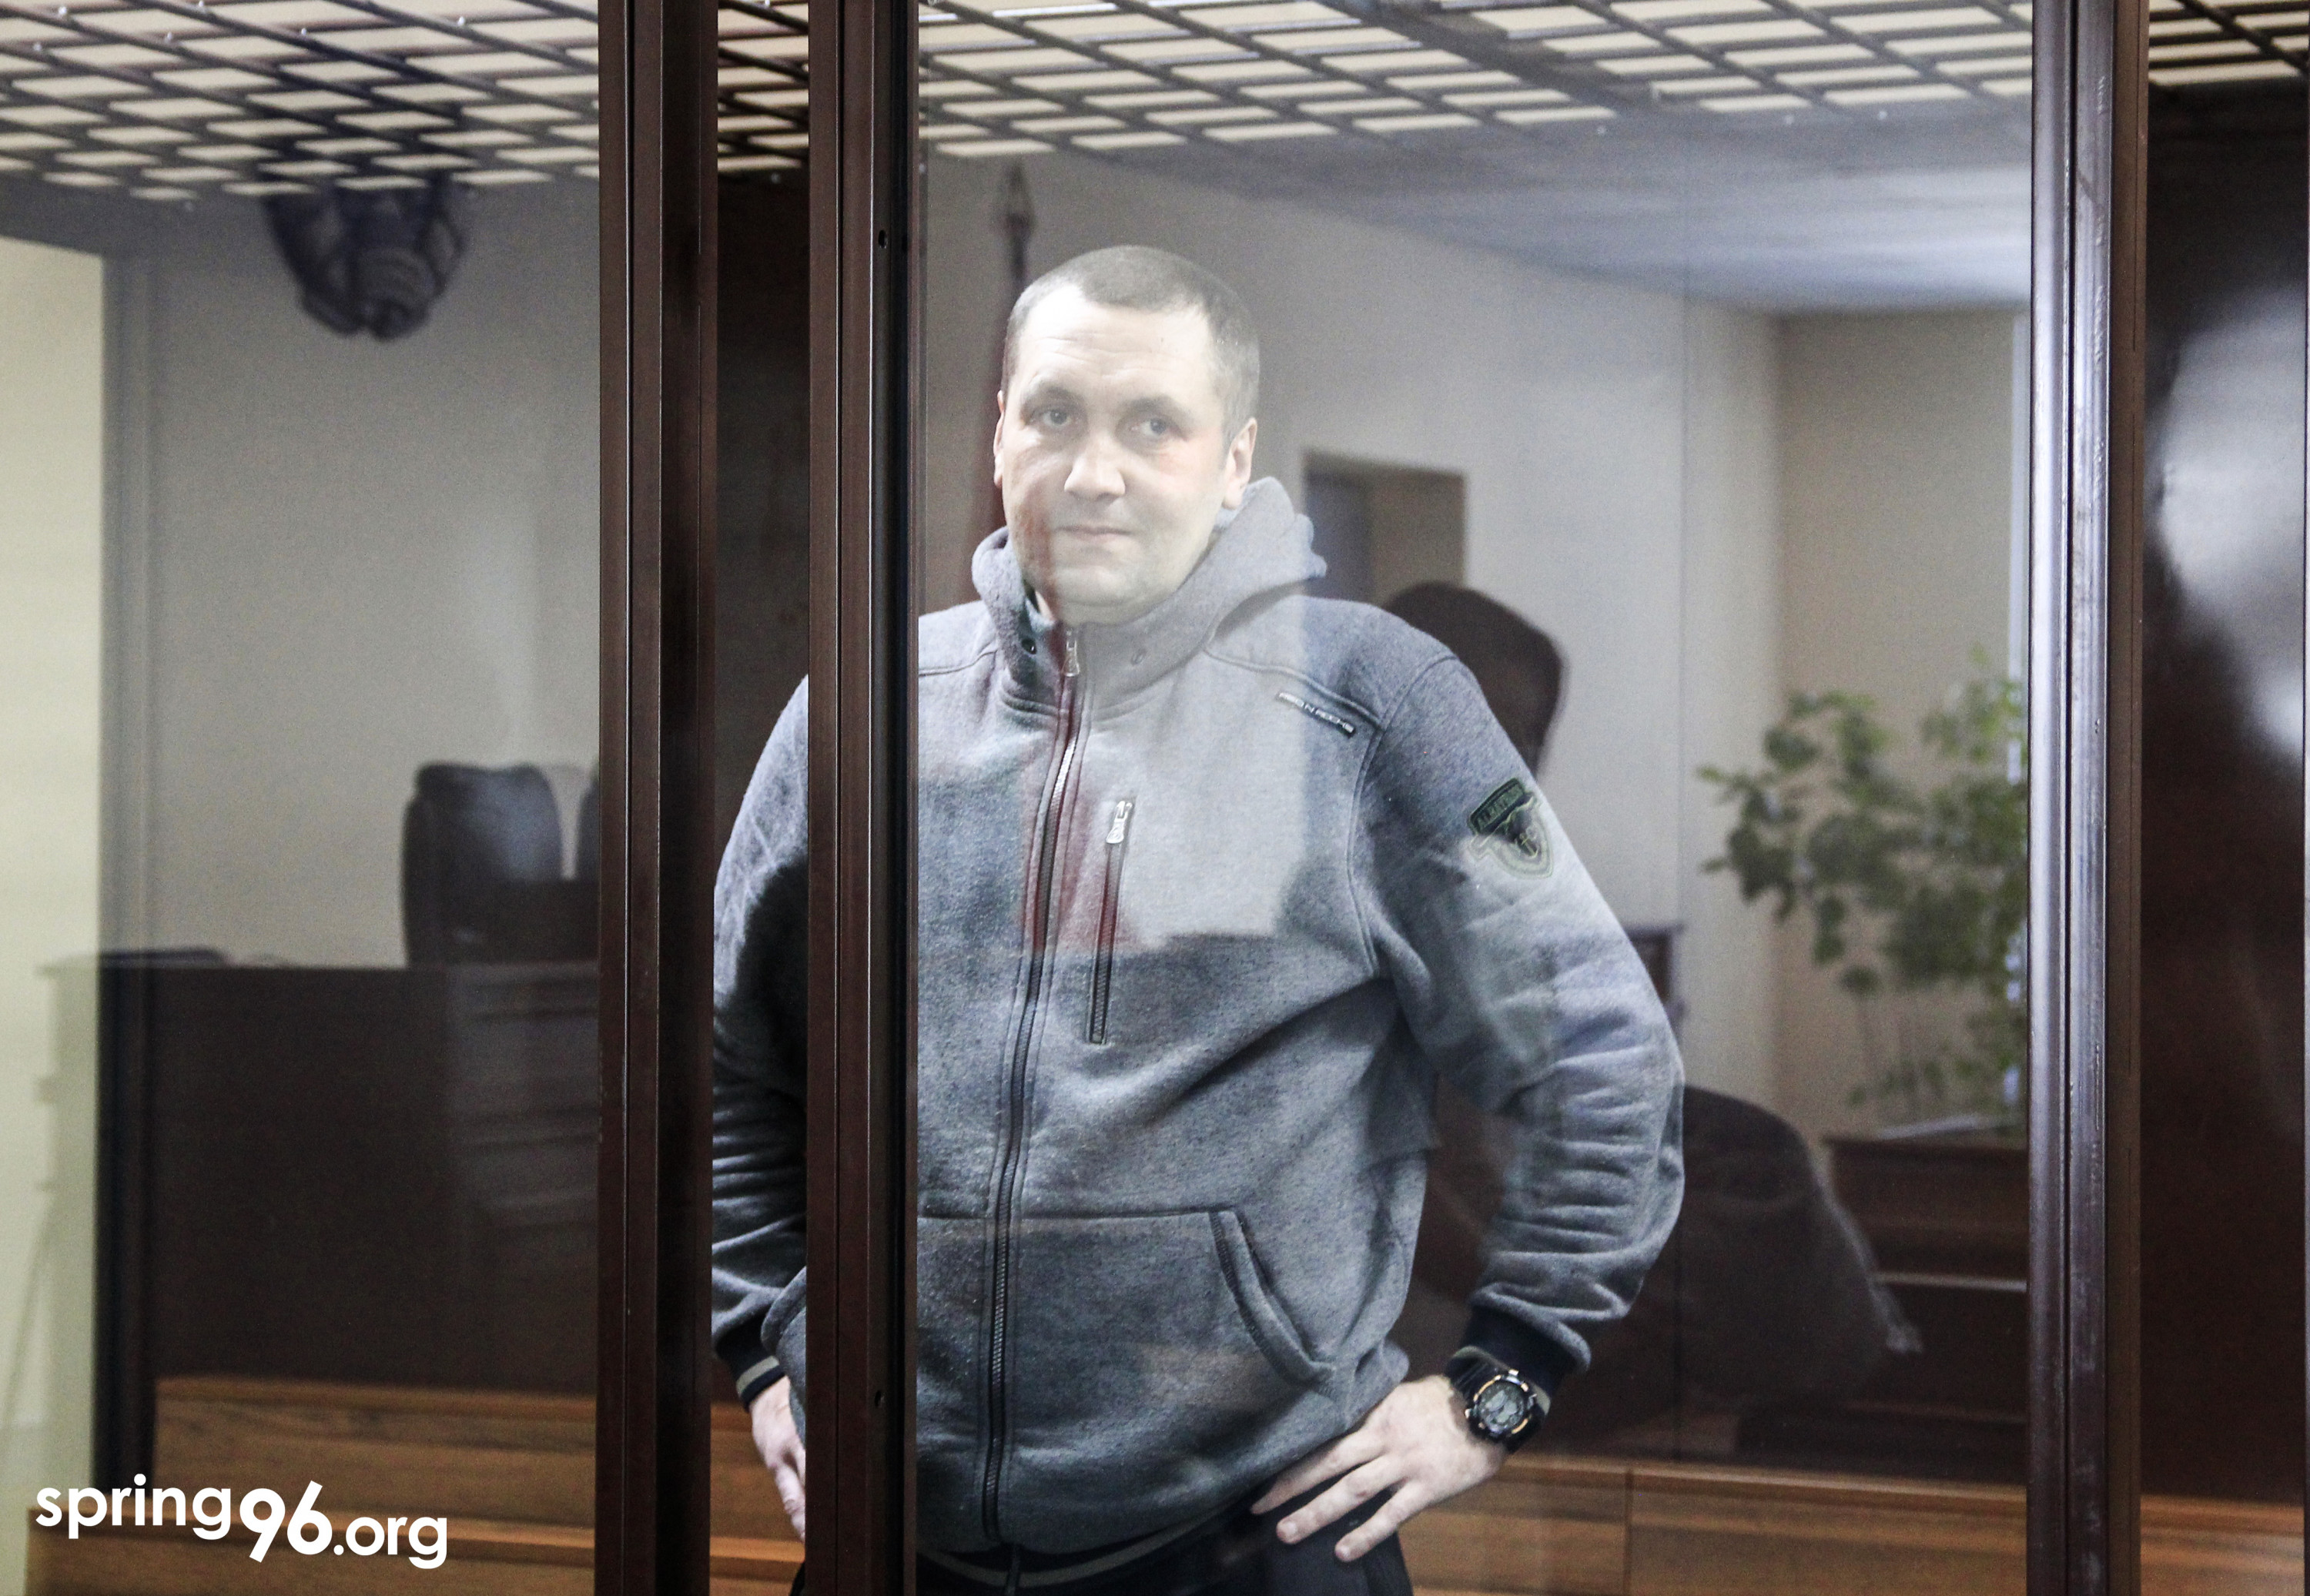 Political prisoner Aliaksandr Aranovich on trial